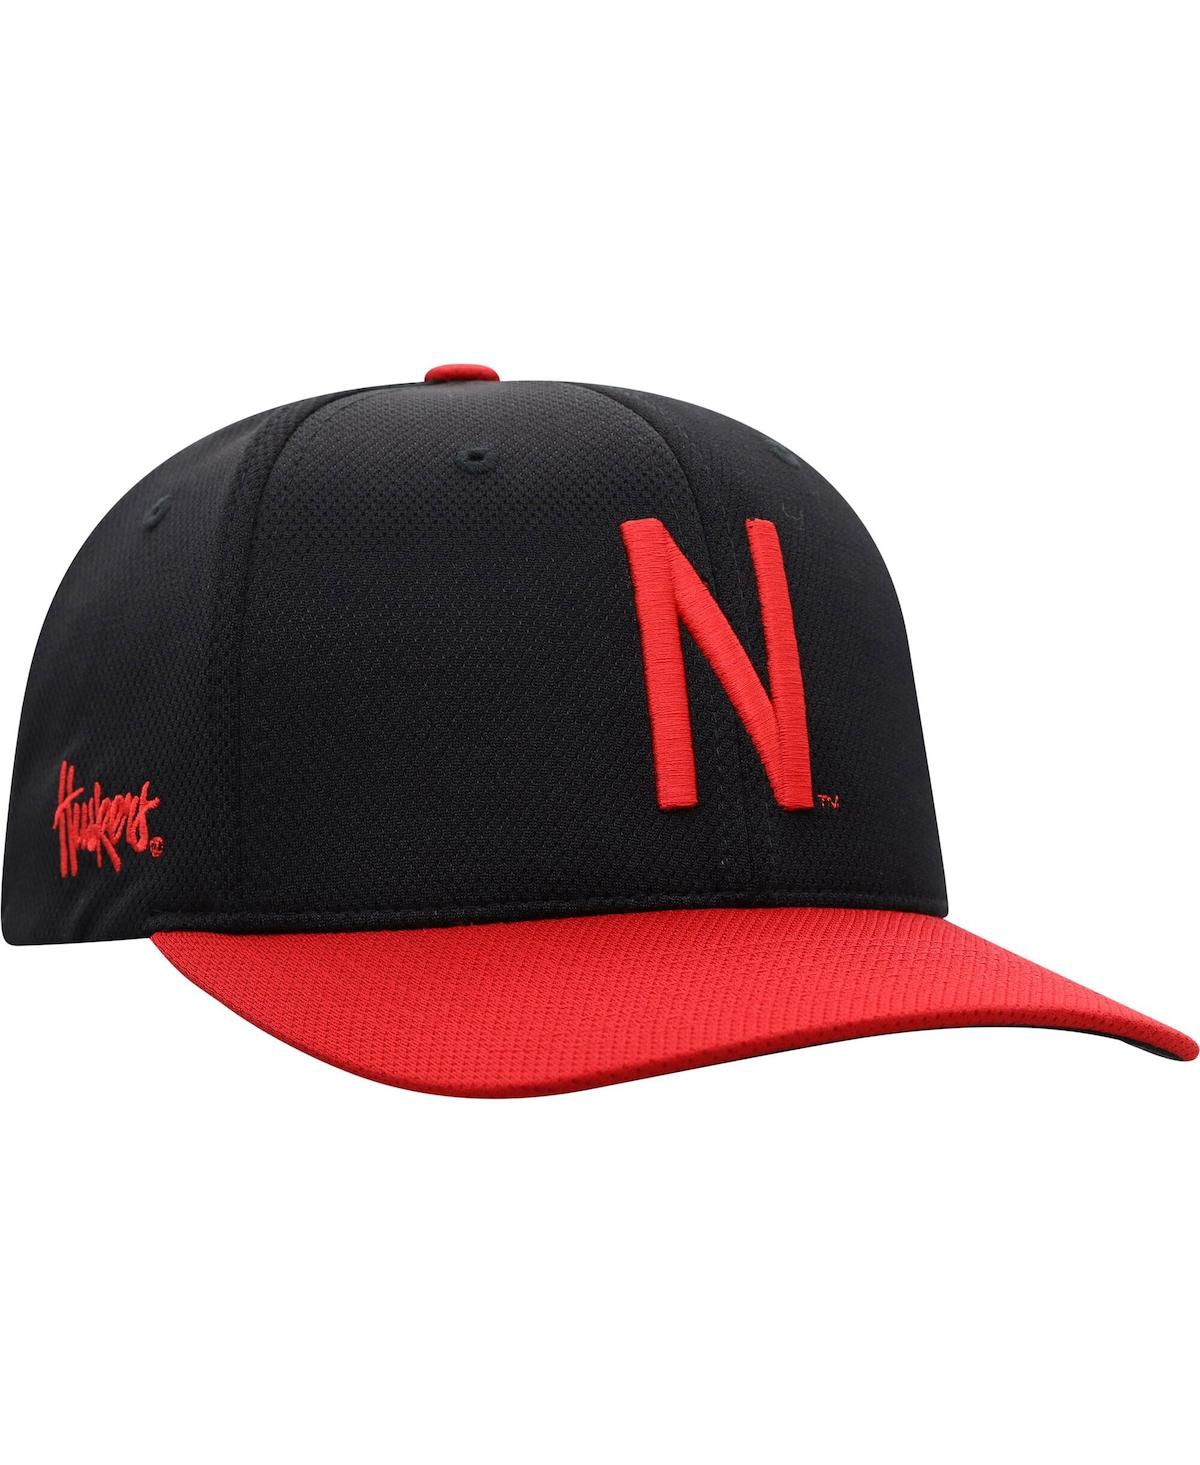 Men's Top of the World Black, Scarlet Nebraska Huskers Two-Tone Reflex Hybrid Tech Flex Hat - Black